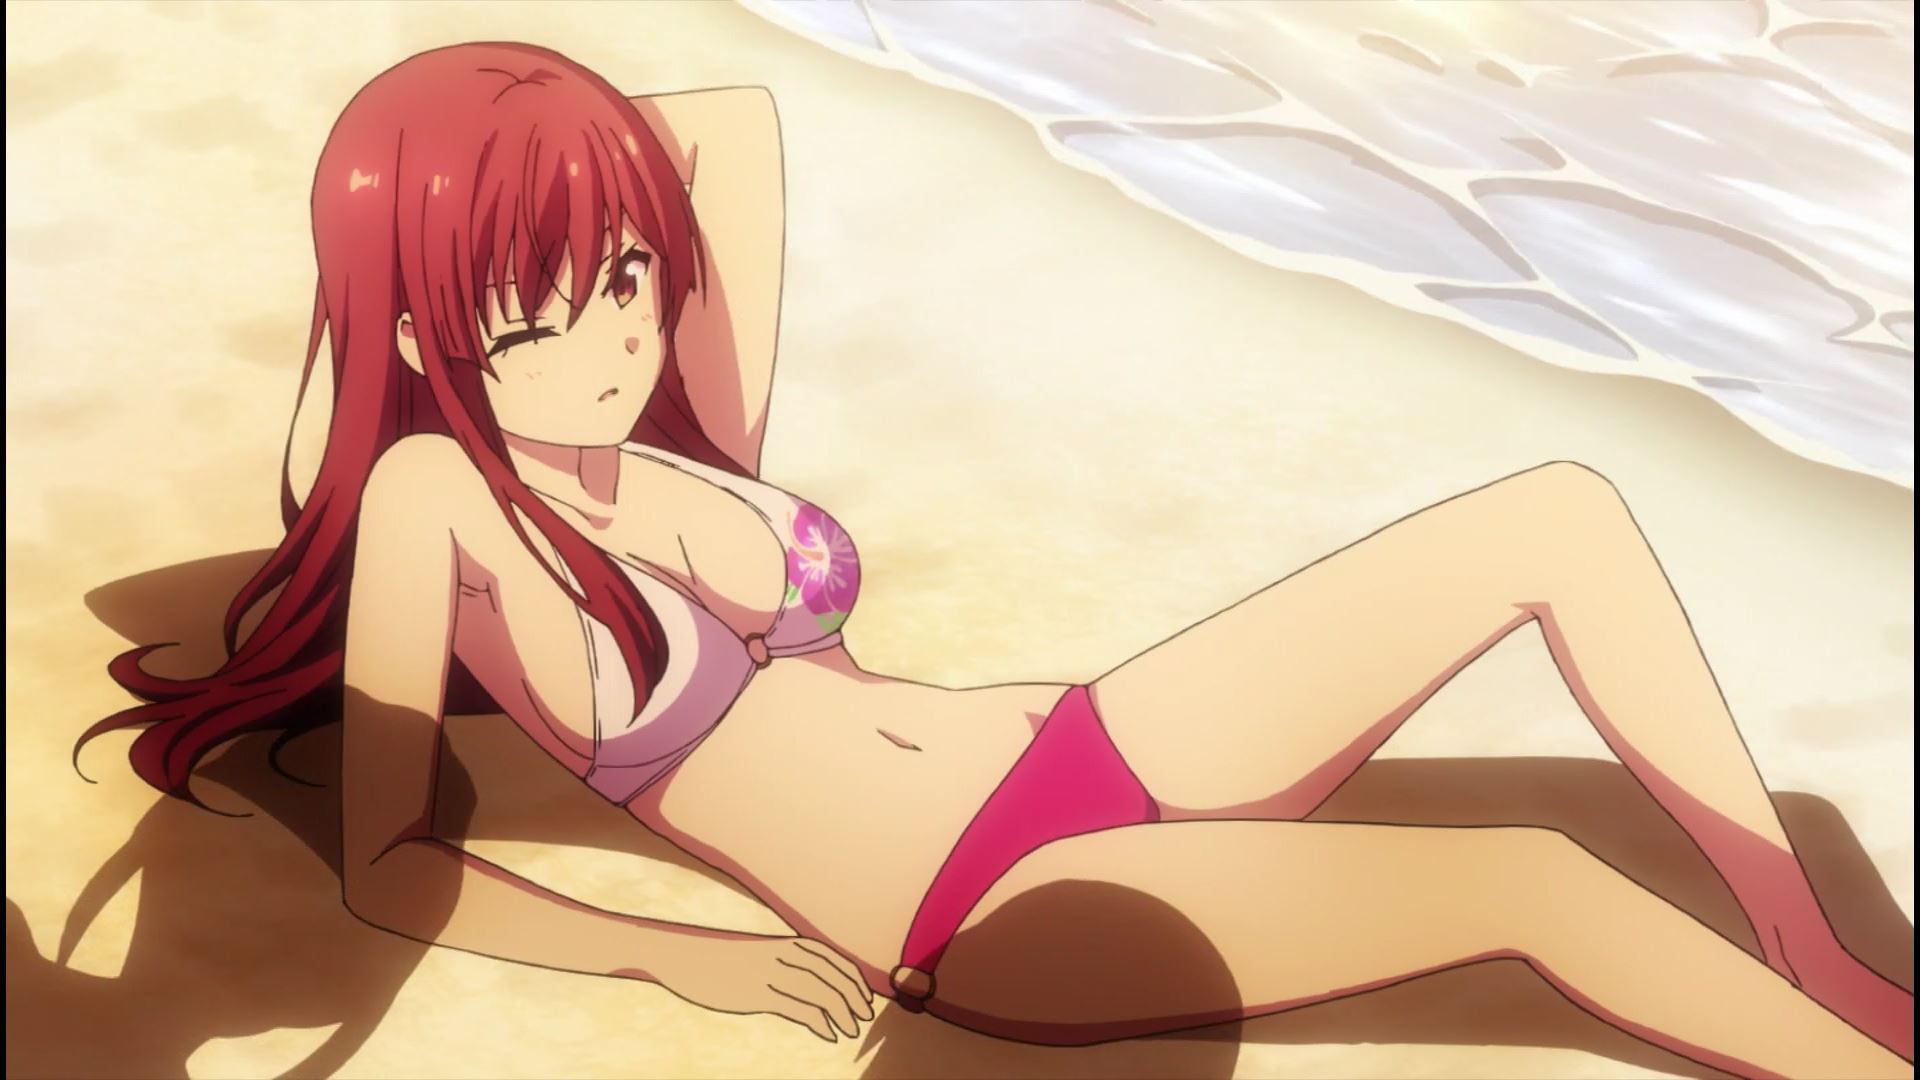 Anime [22/7 (Nanabun Nonijuuni)] 6 episodes erotic scene of girls erotic swimsuit! 26